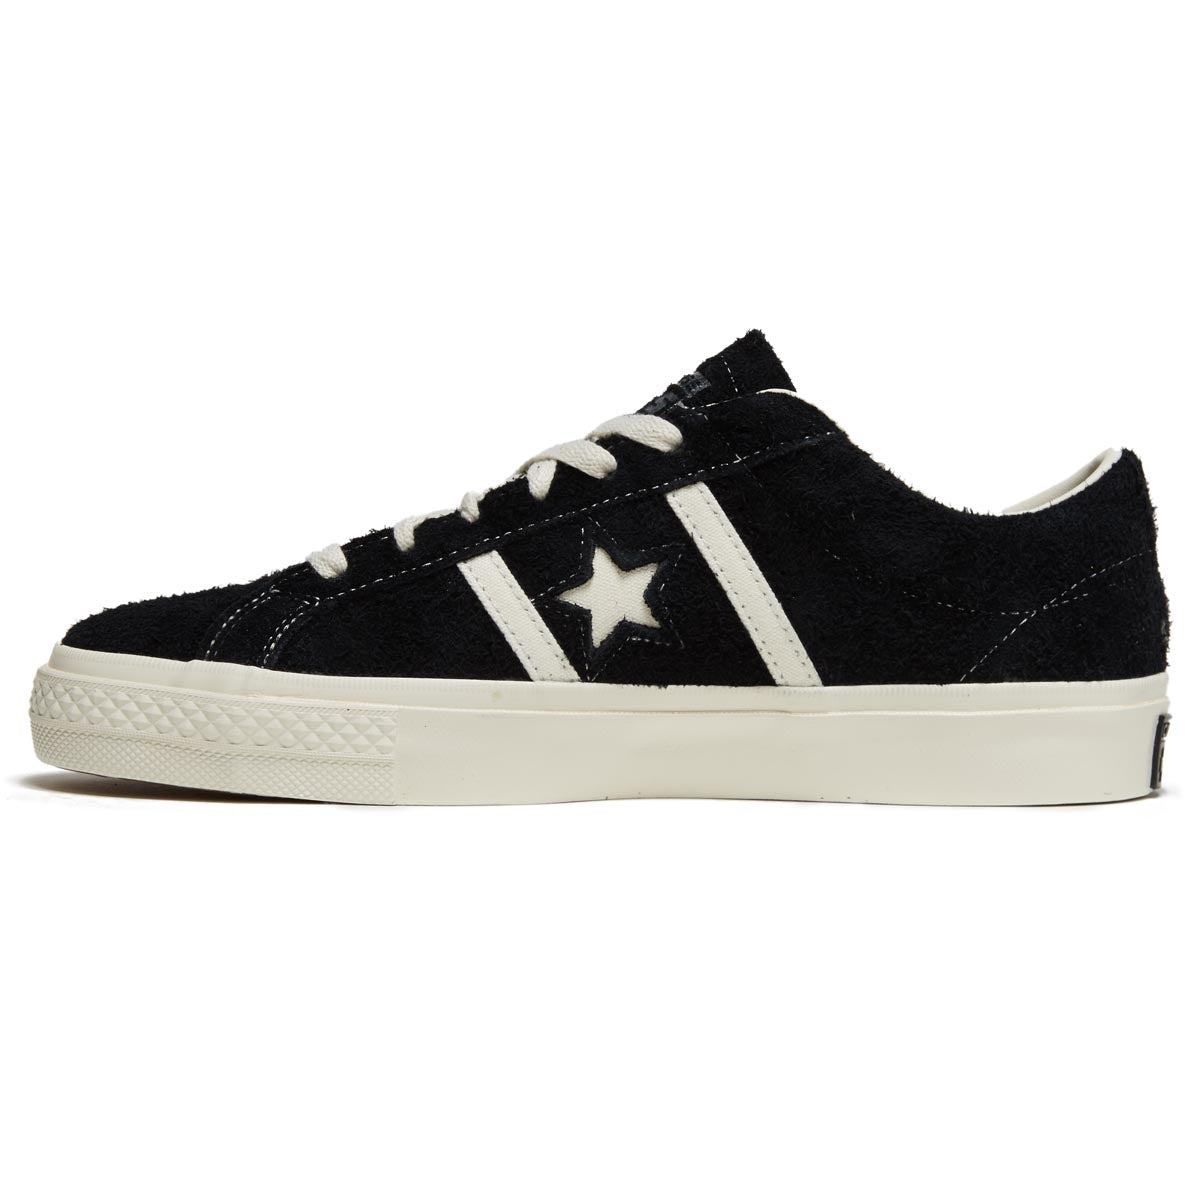 Converse One Star Academy Pro Suede Ox Shoes - Black/Egret/Egret image 2